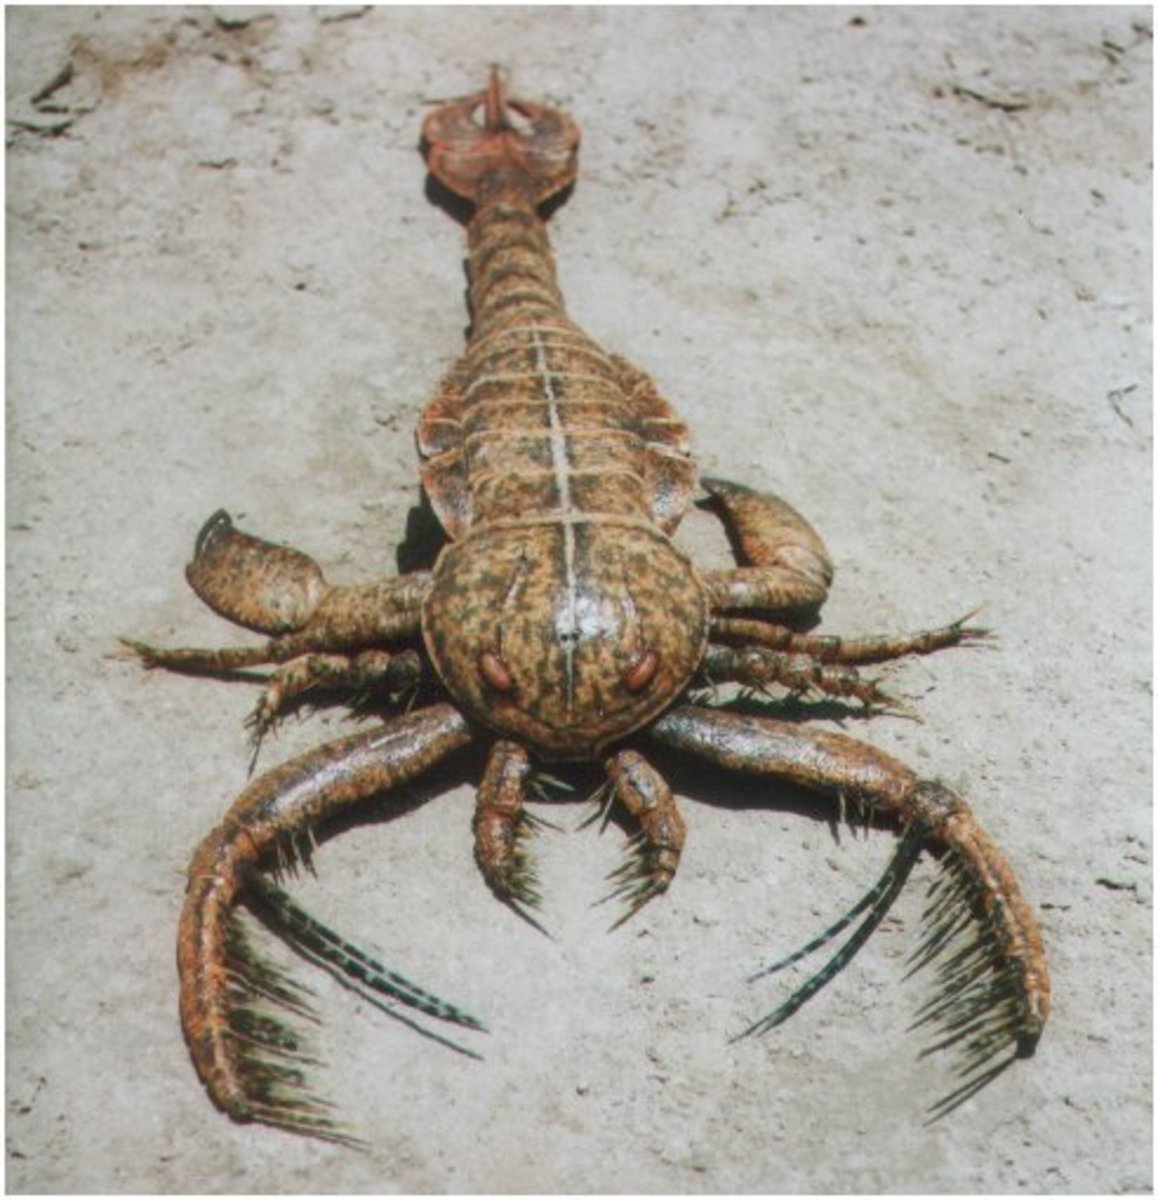 Jaekelopterus - Giant Eurypterid Sea Scorpion